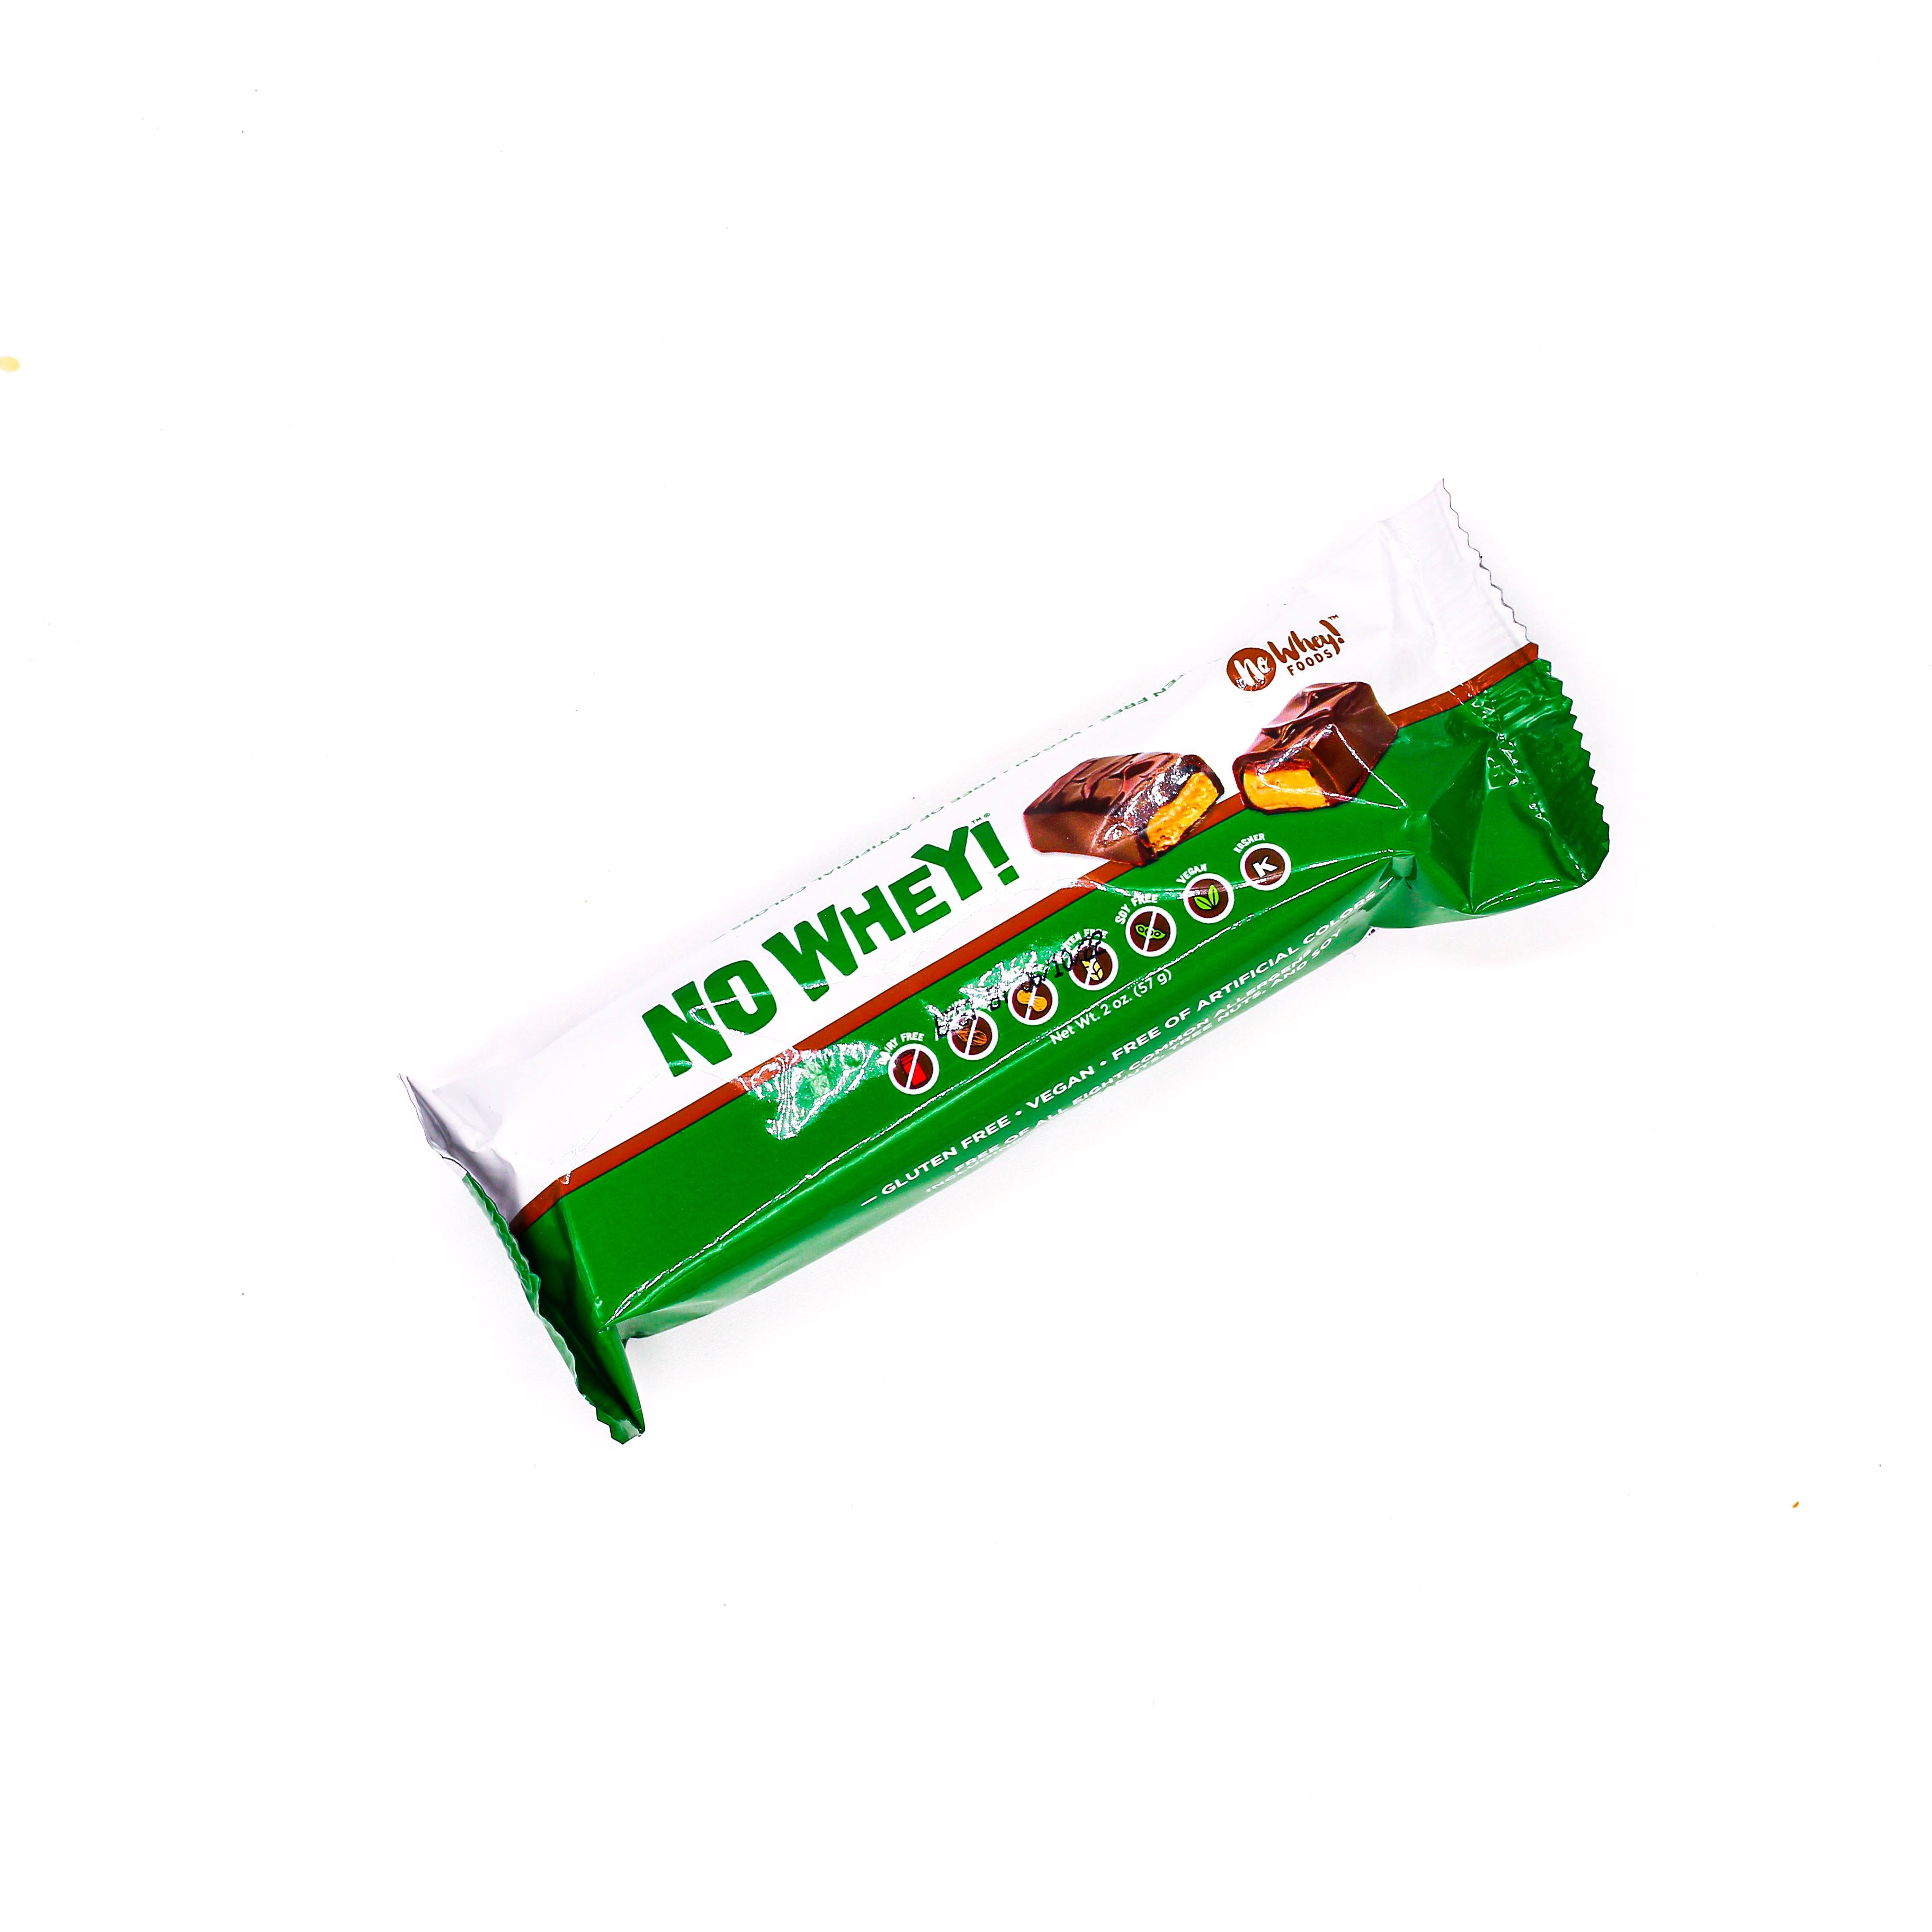 Premium Chocolatiers No Whey Vegan Candy Bar - Caramel Nougat, 2oz